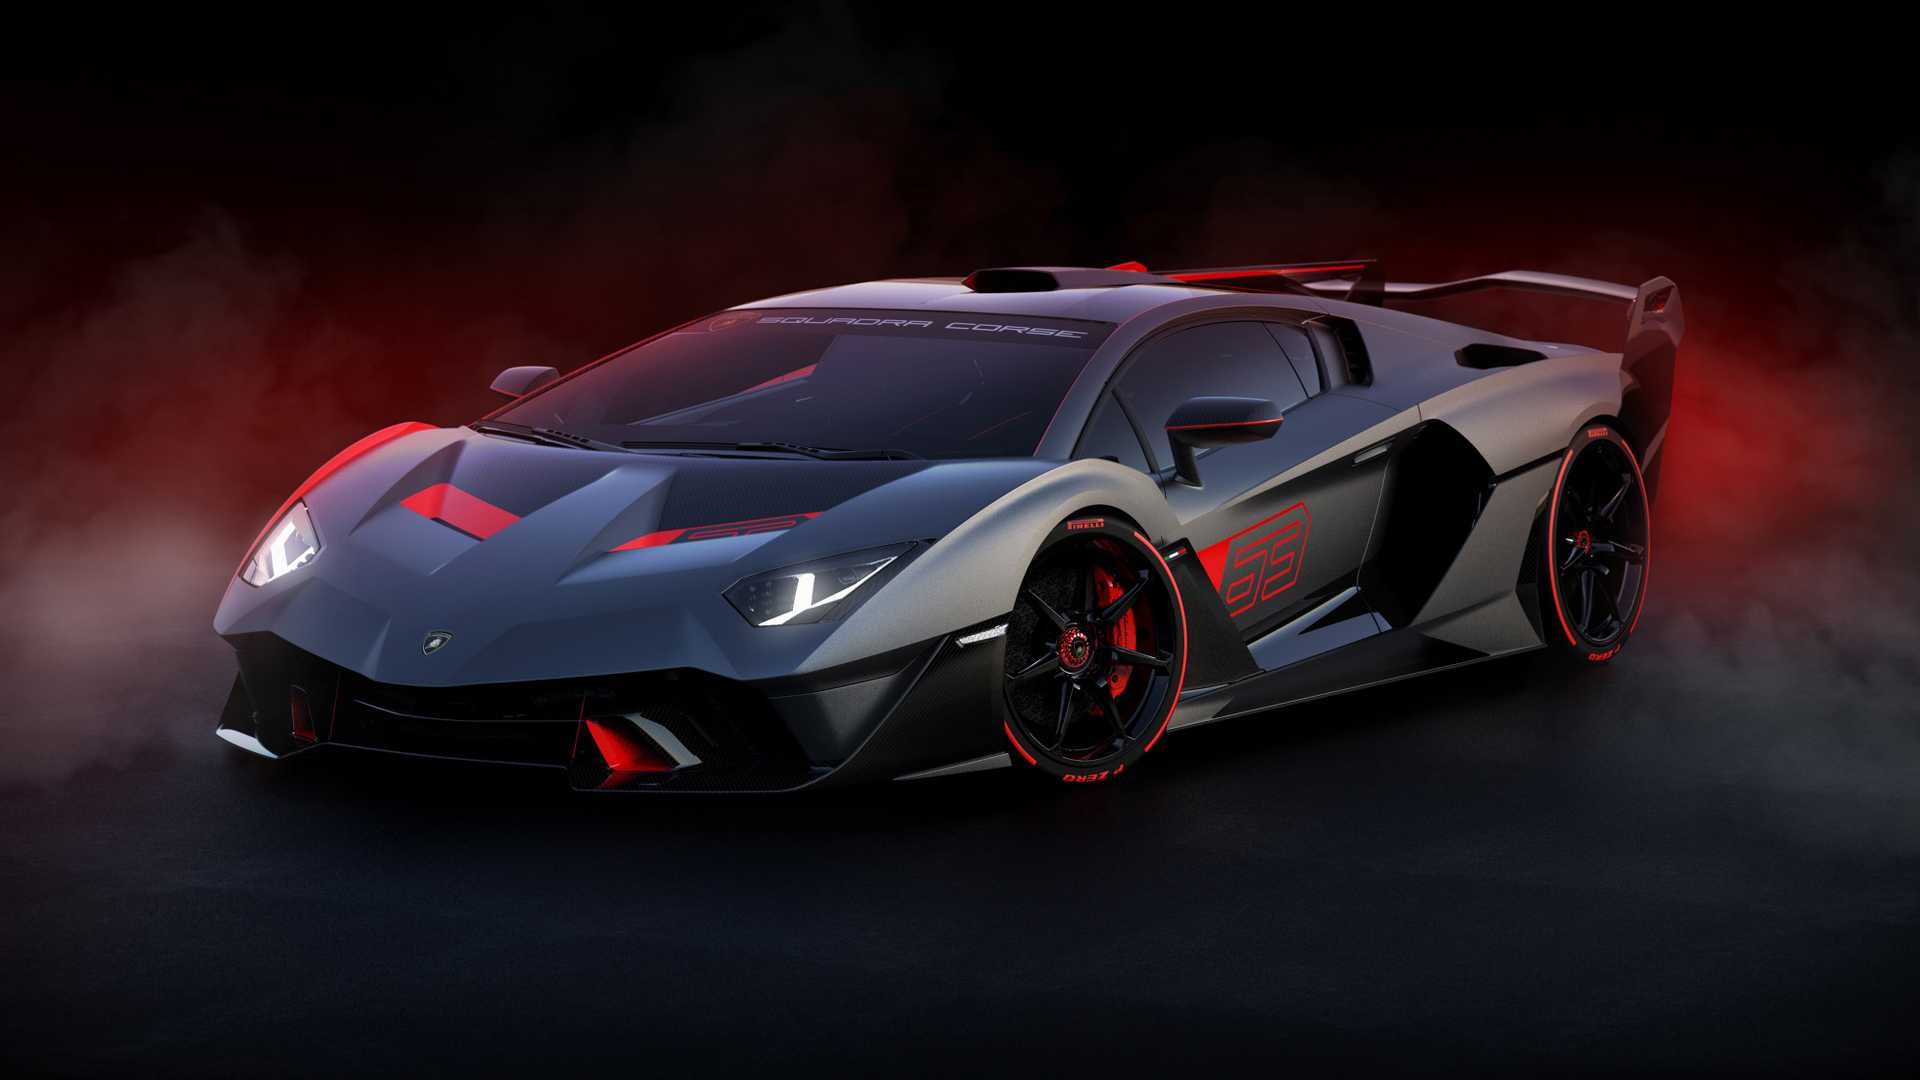 Lamborghini motorsport squad builds a wild one-off Aventador